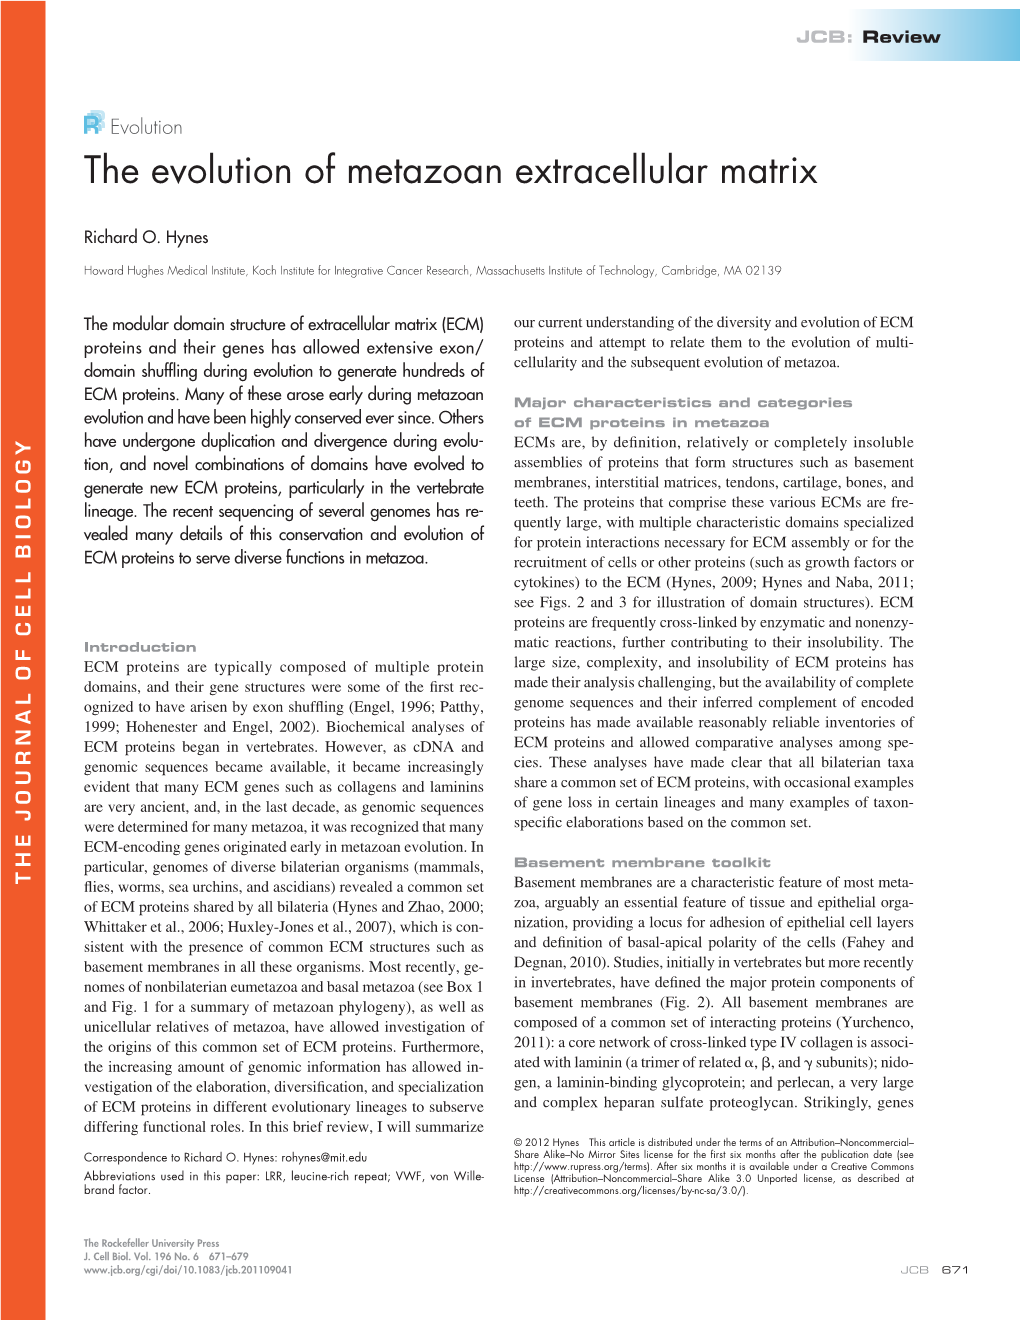 The Evolution of Metazoan Extracellular Matrix